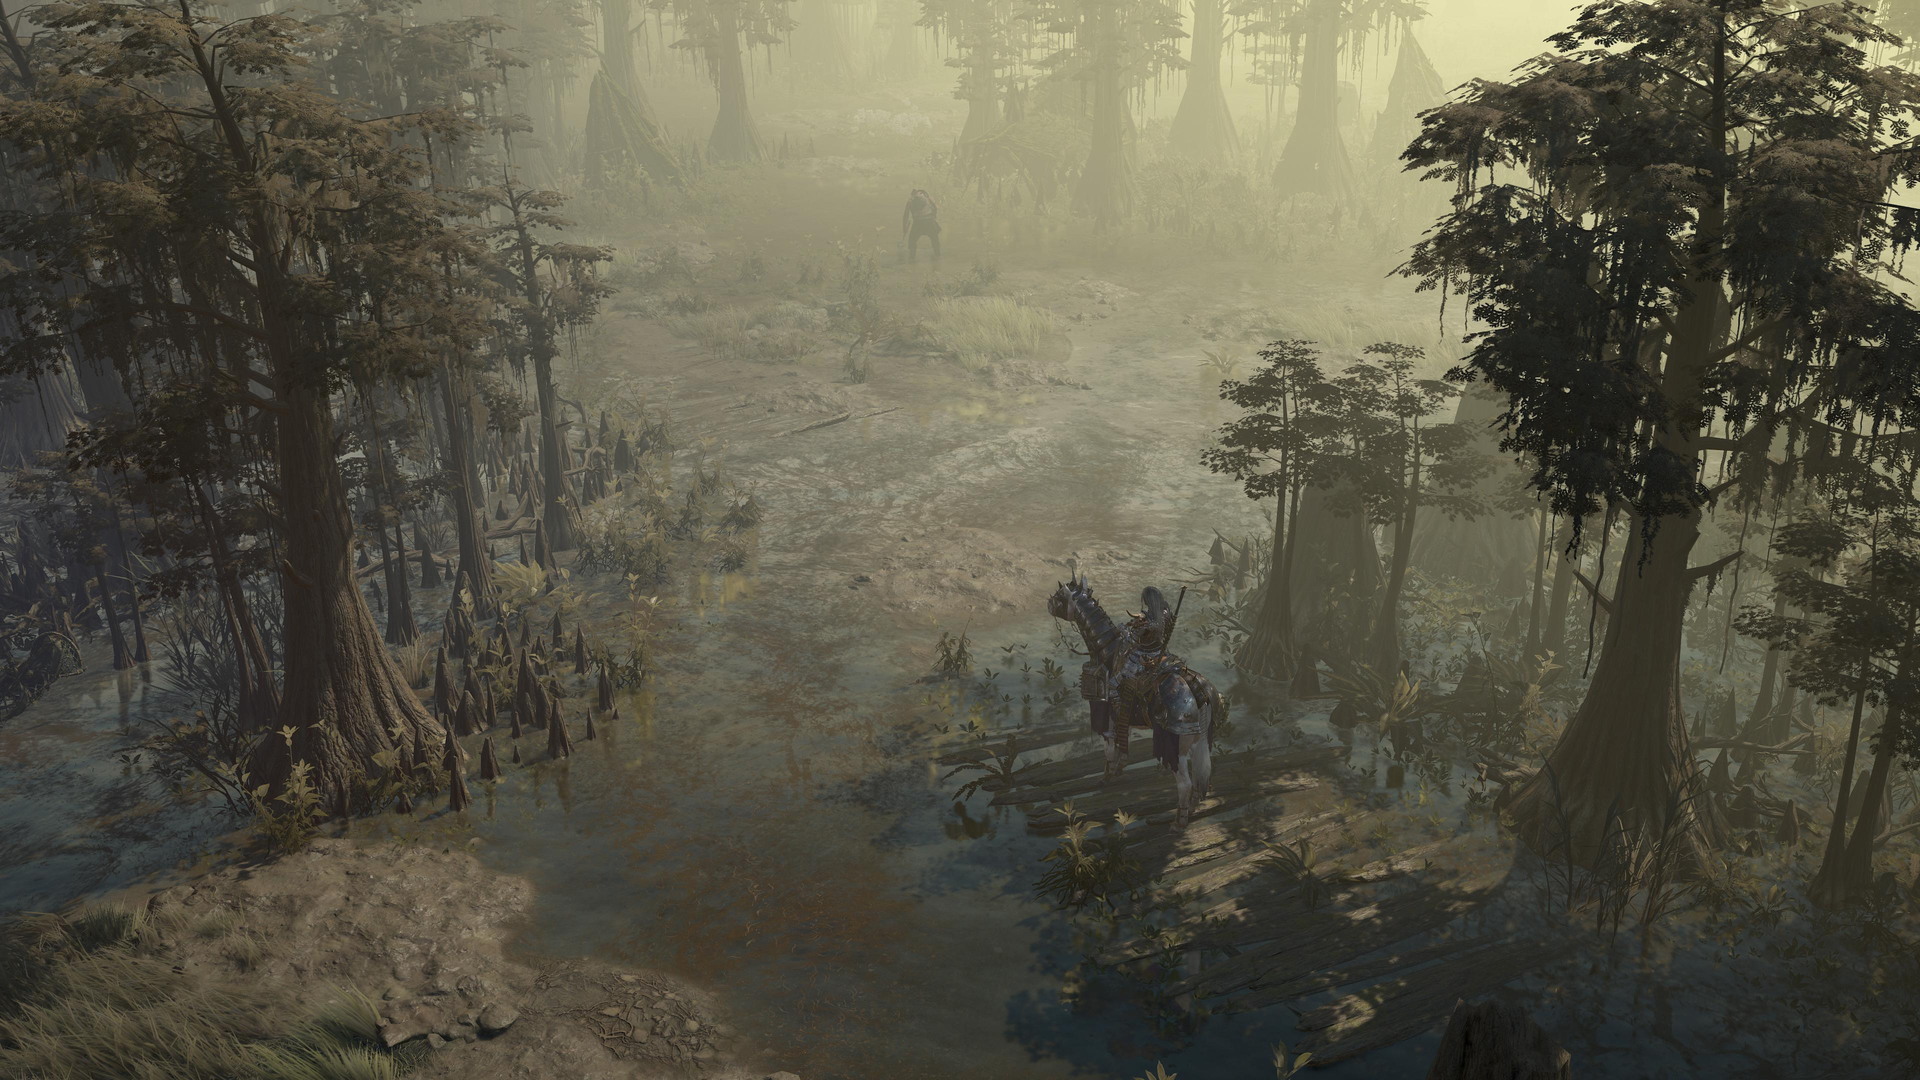 Diablo IV - screenshot 5